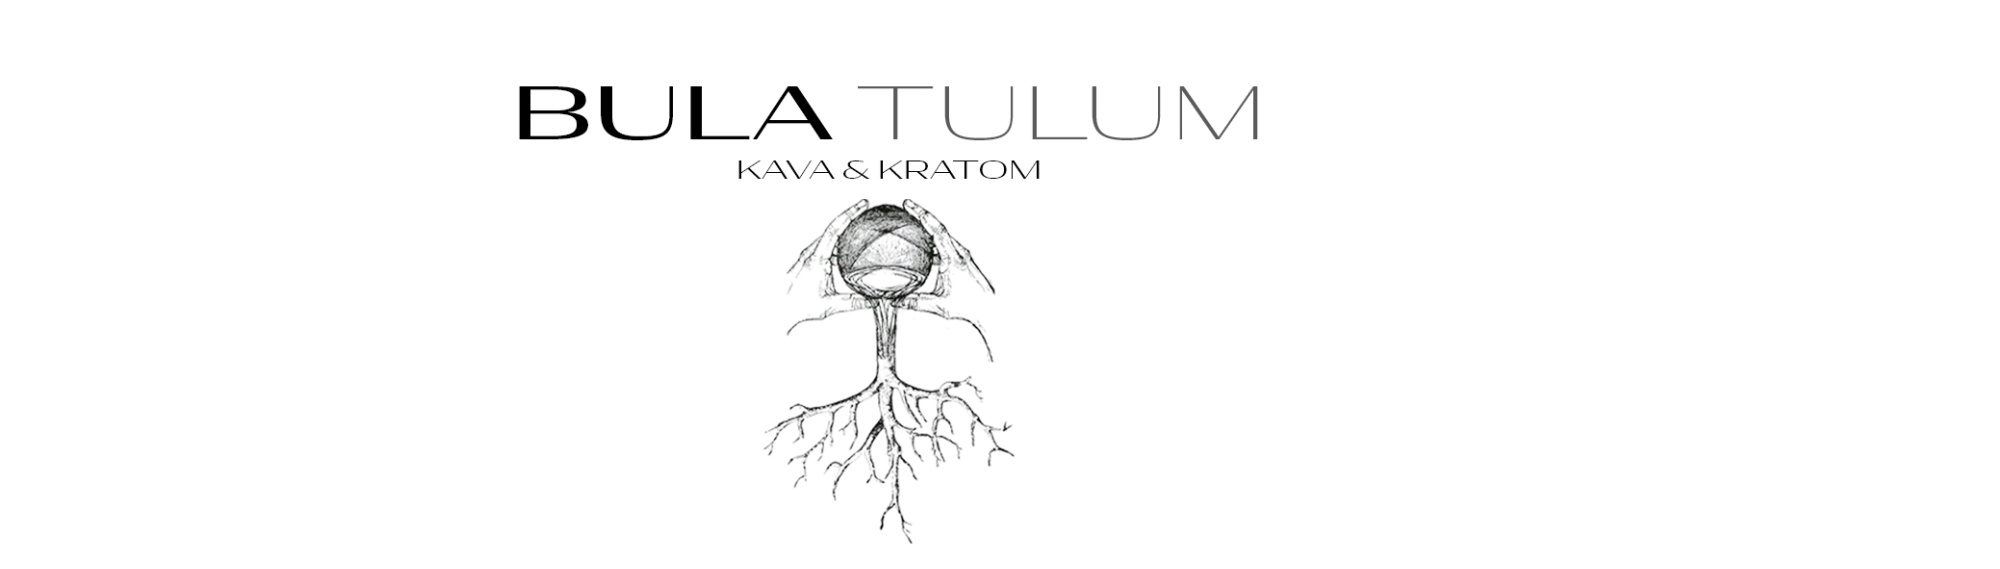 image of bula tulum kava & kratom